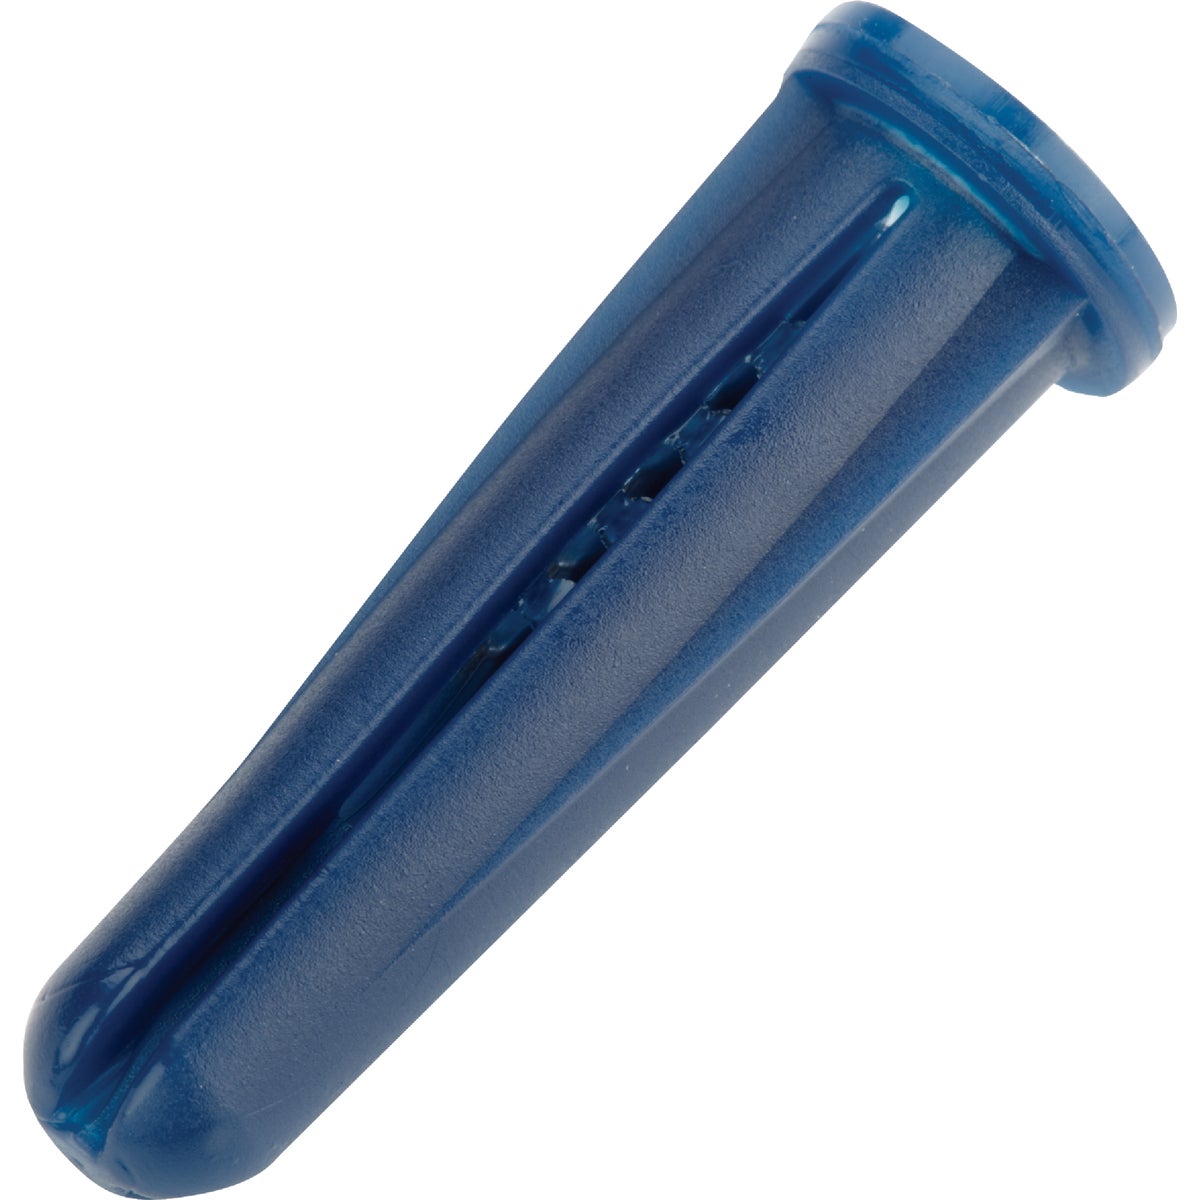 Hillman #10 - #12 Thread x 1 In. Blue Conical Plastic Anchor (100 Ct.)